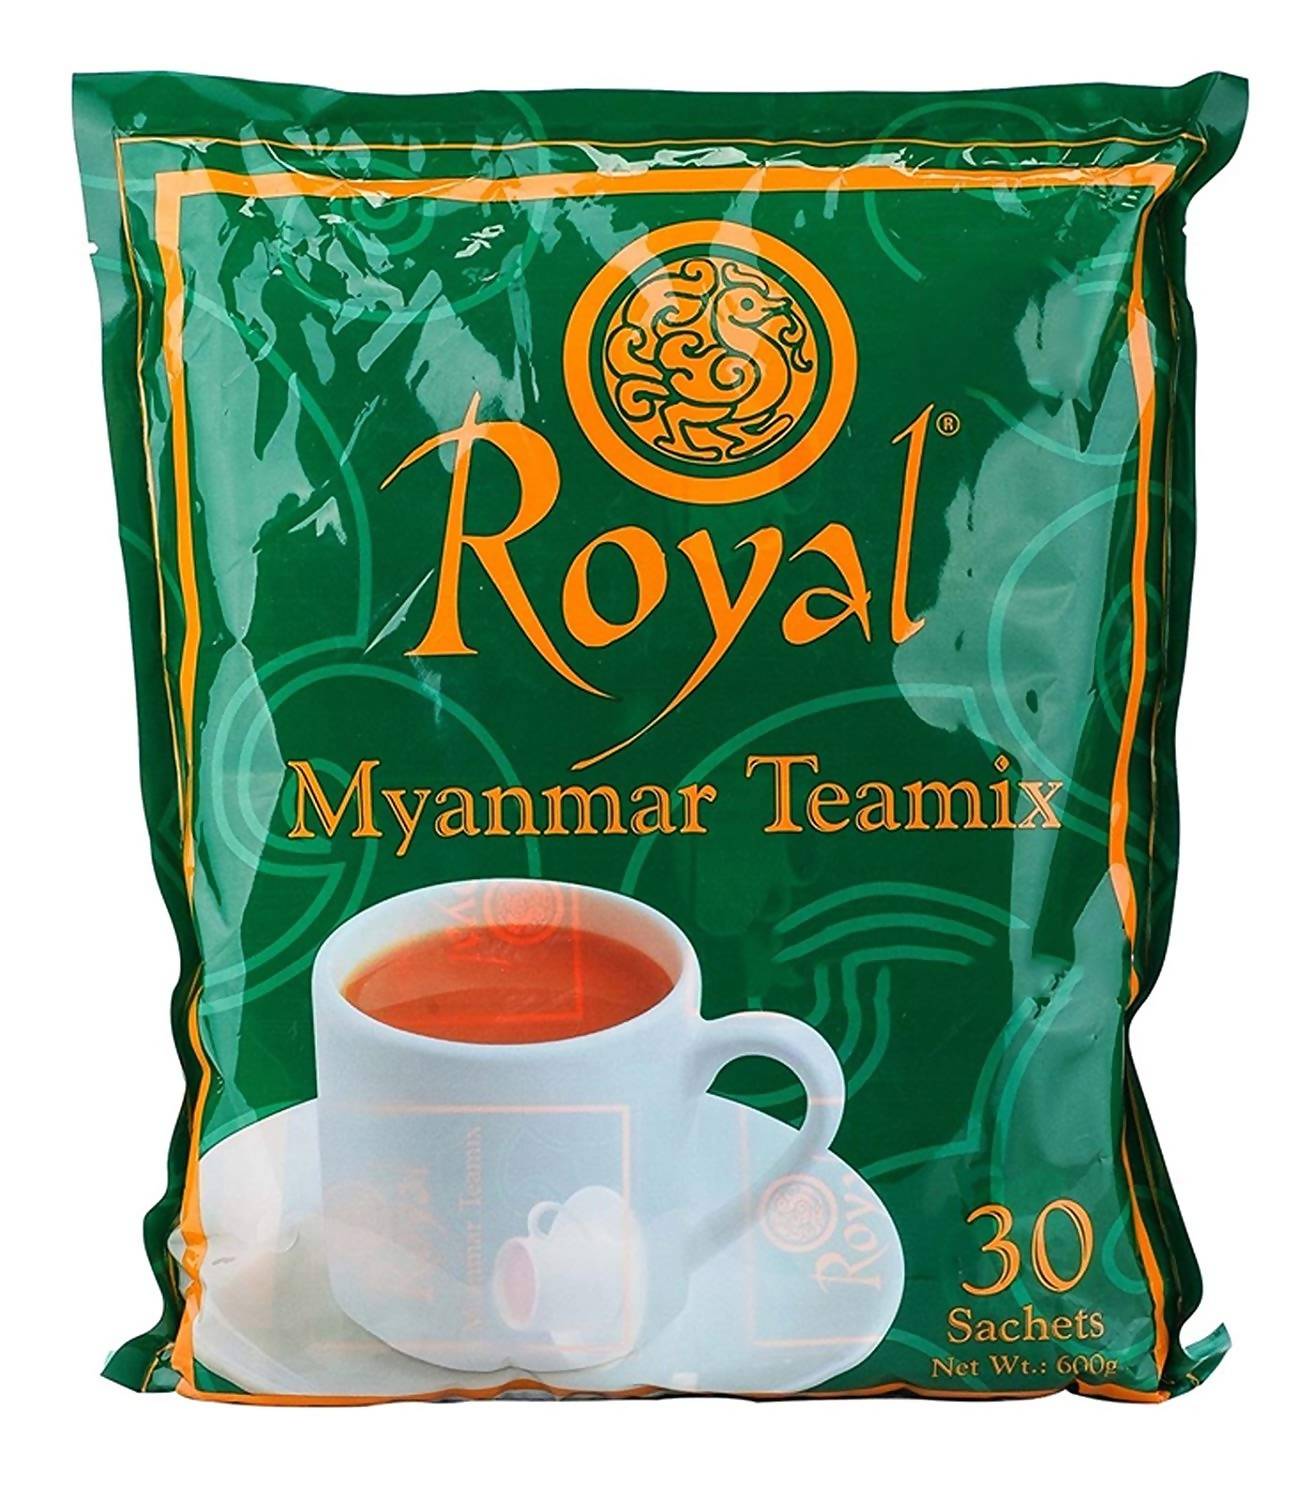 Royal Myanmar Teamix 3 in 1 Instant Tea Burmese Tea Mix 30 Packets